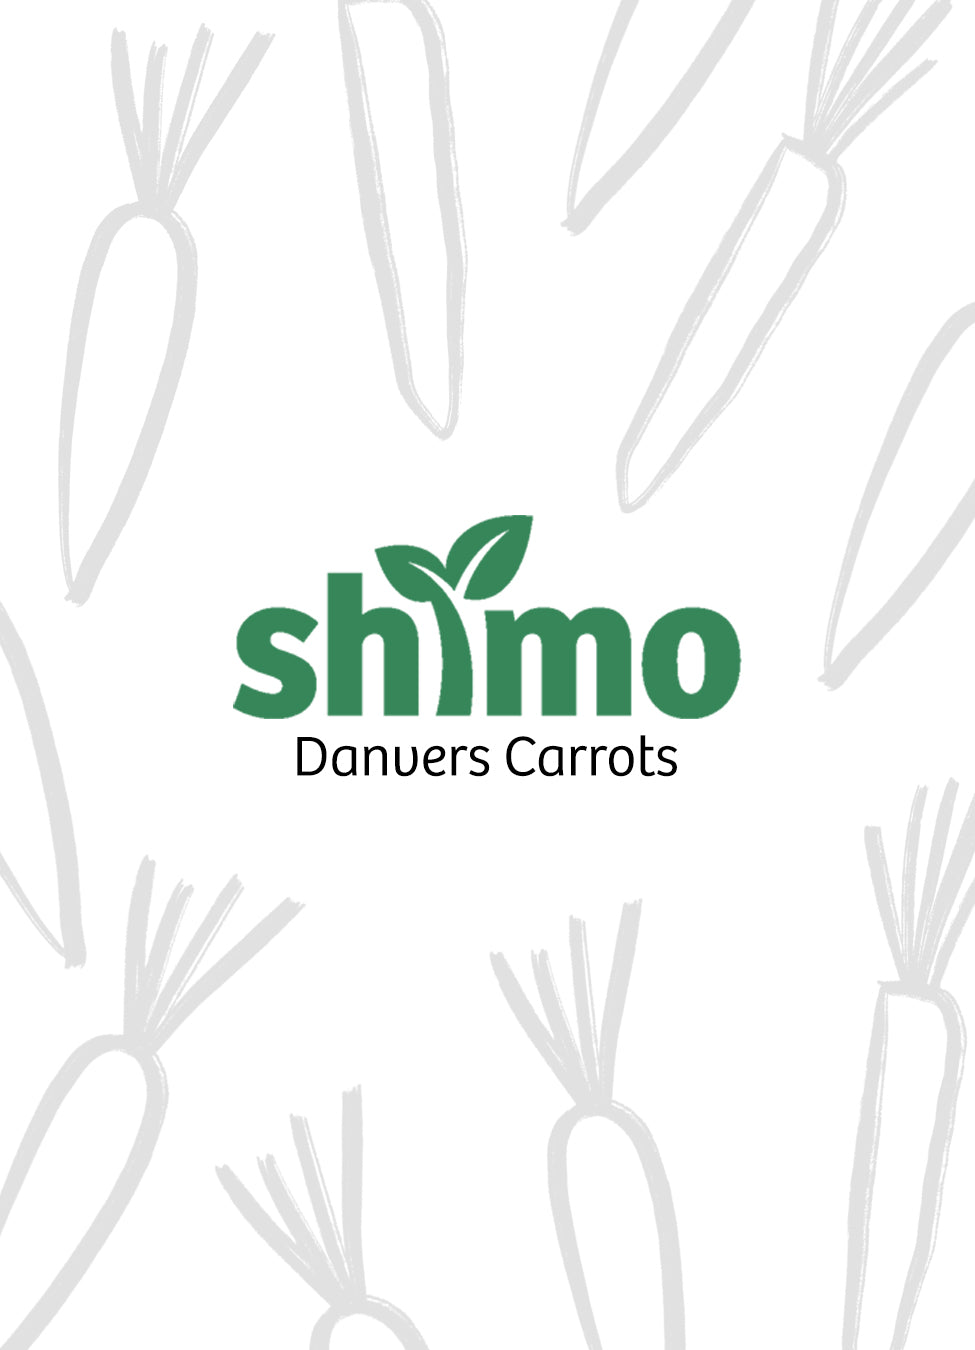 Shimo Danvers Half-Long Carrot Packet